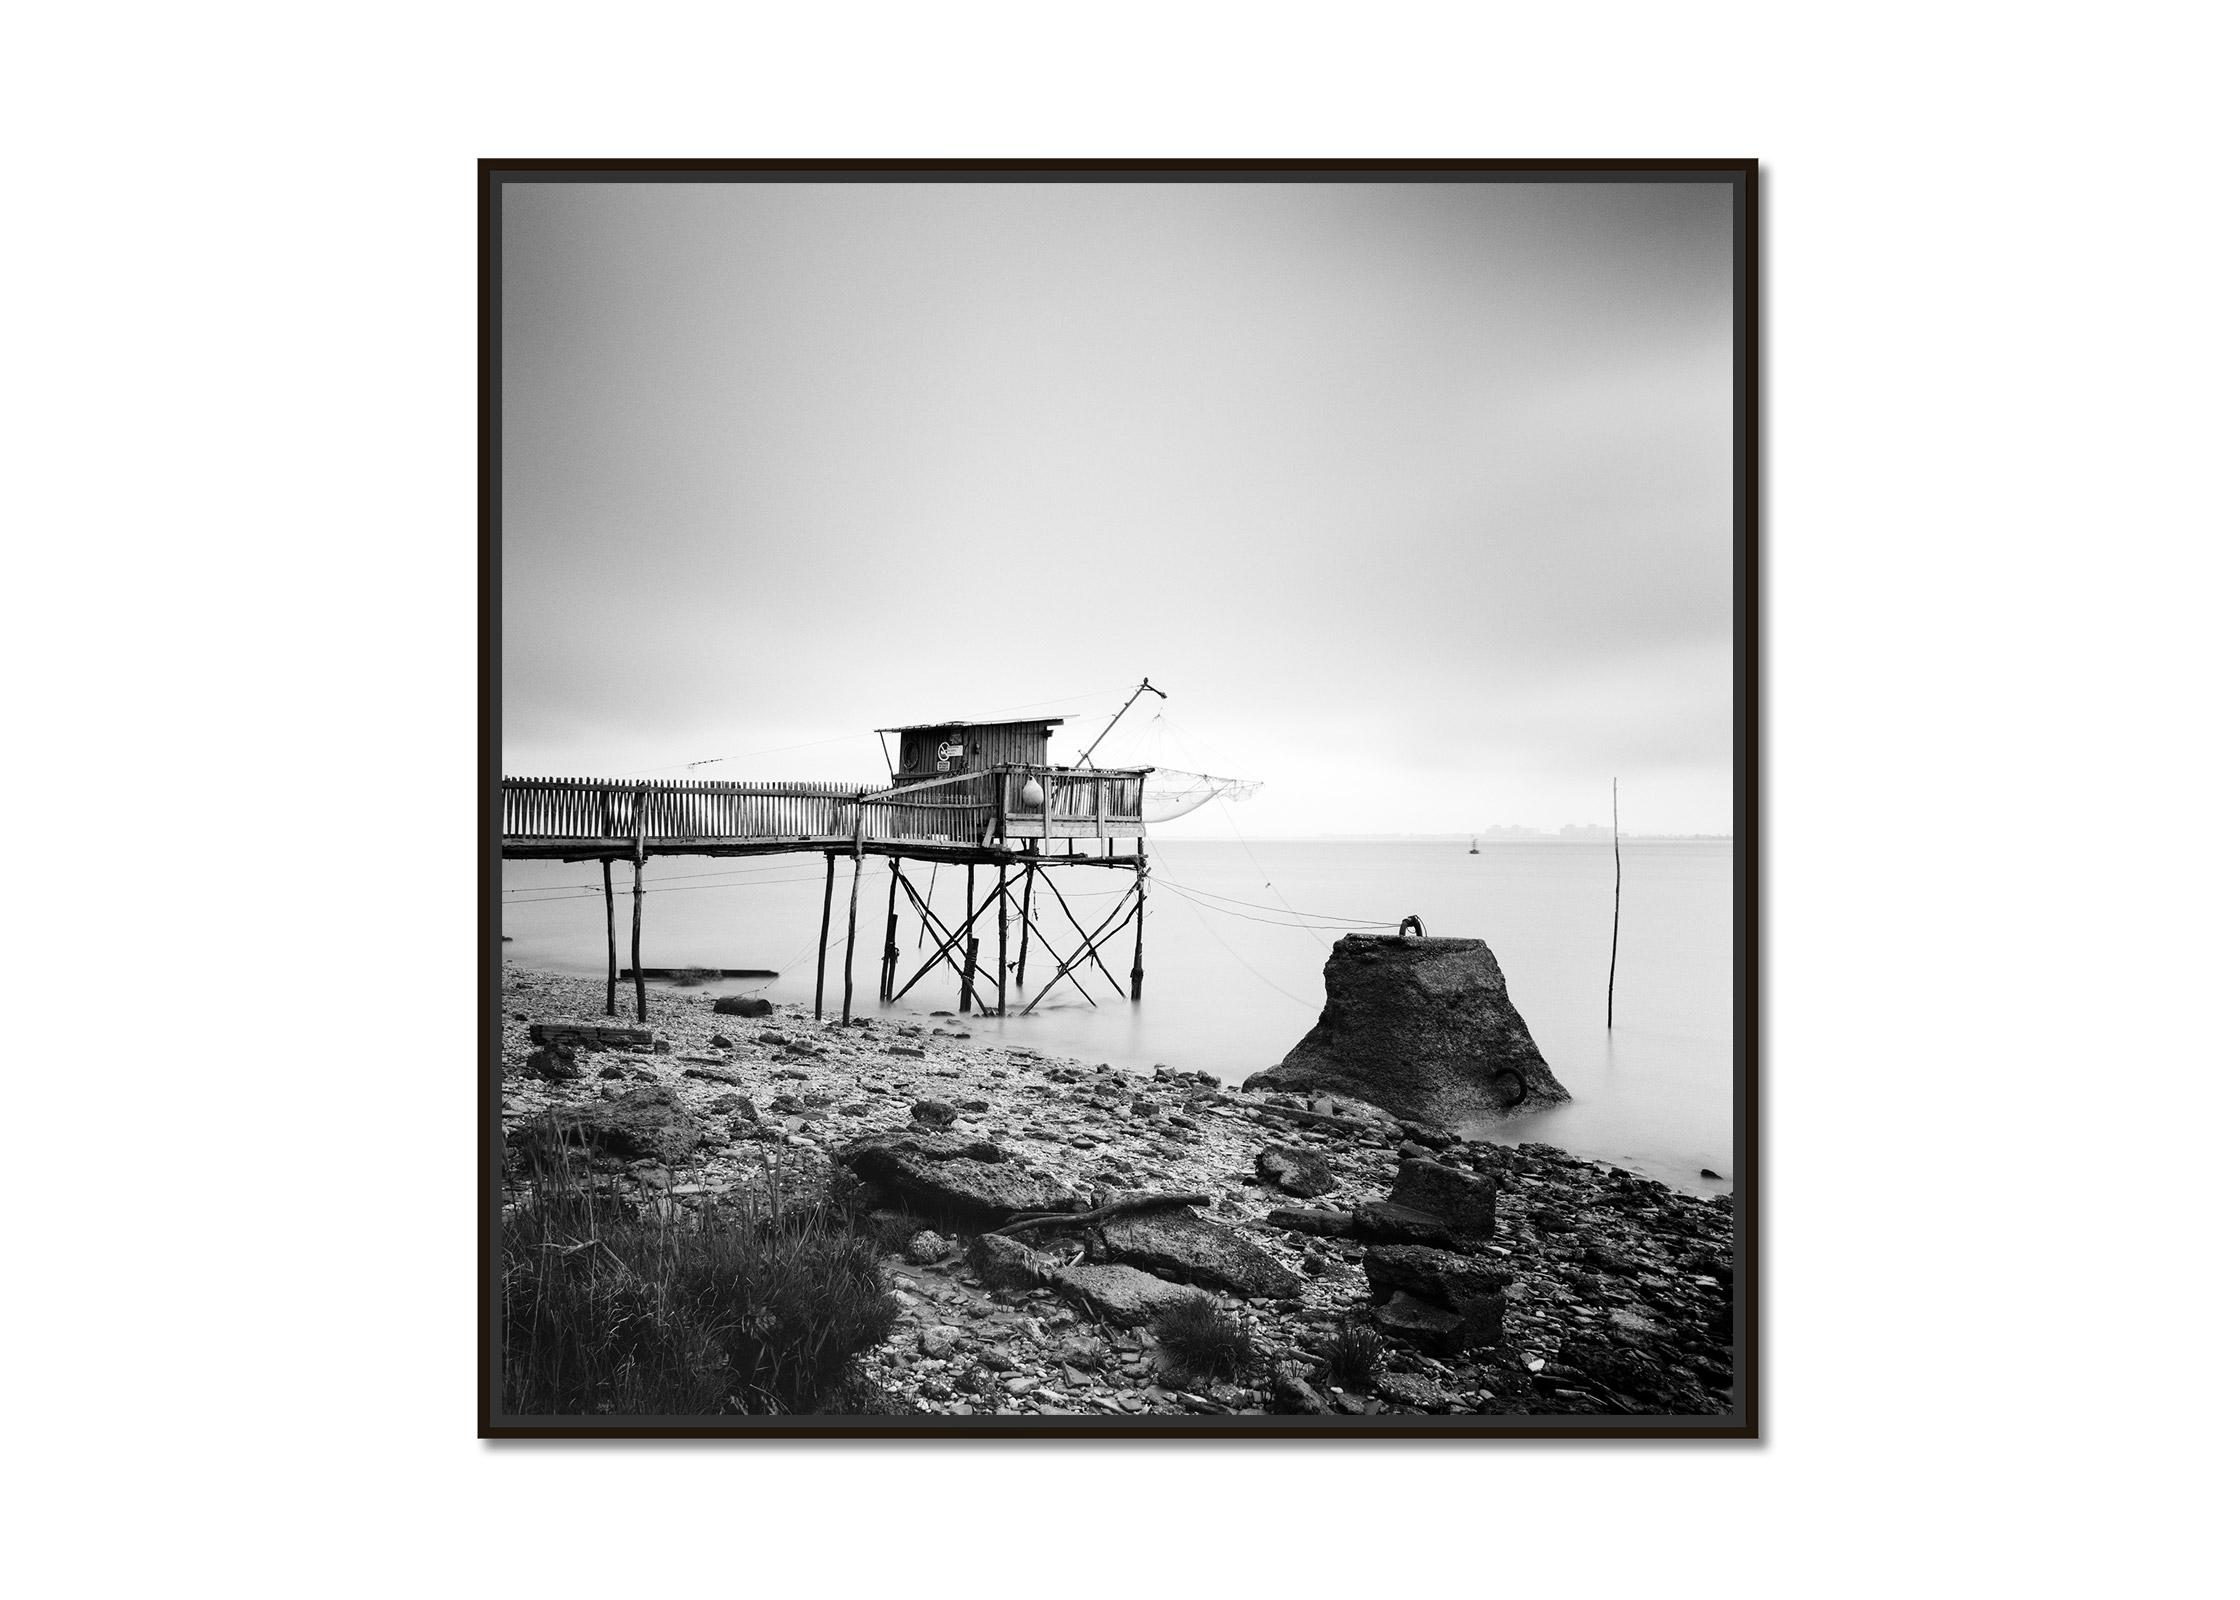 Stilt House, Fishing, shellfish, France, black and white photography landscape - Photograph by Gerald Berghammer